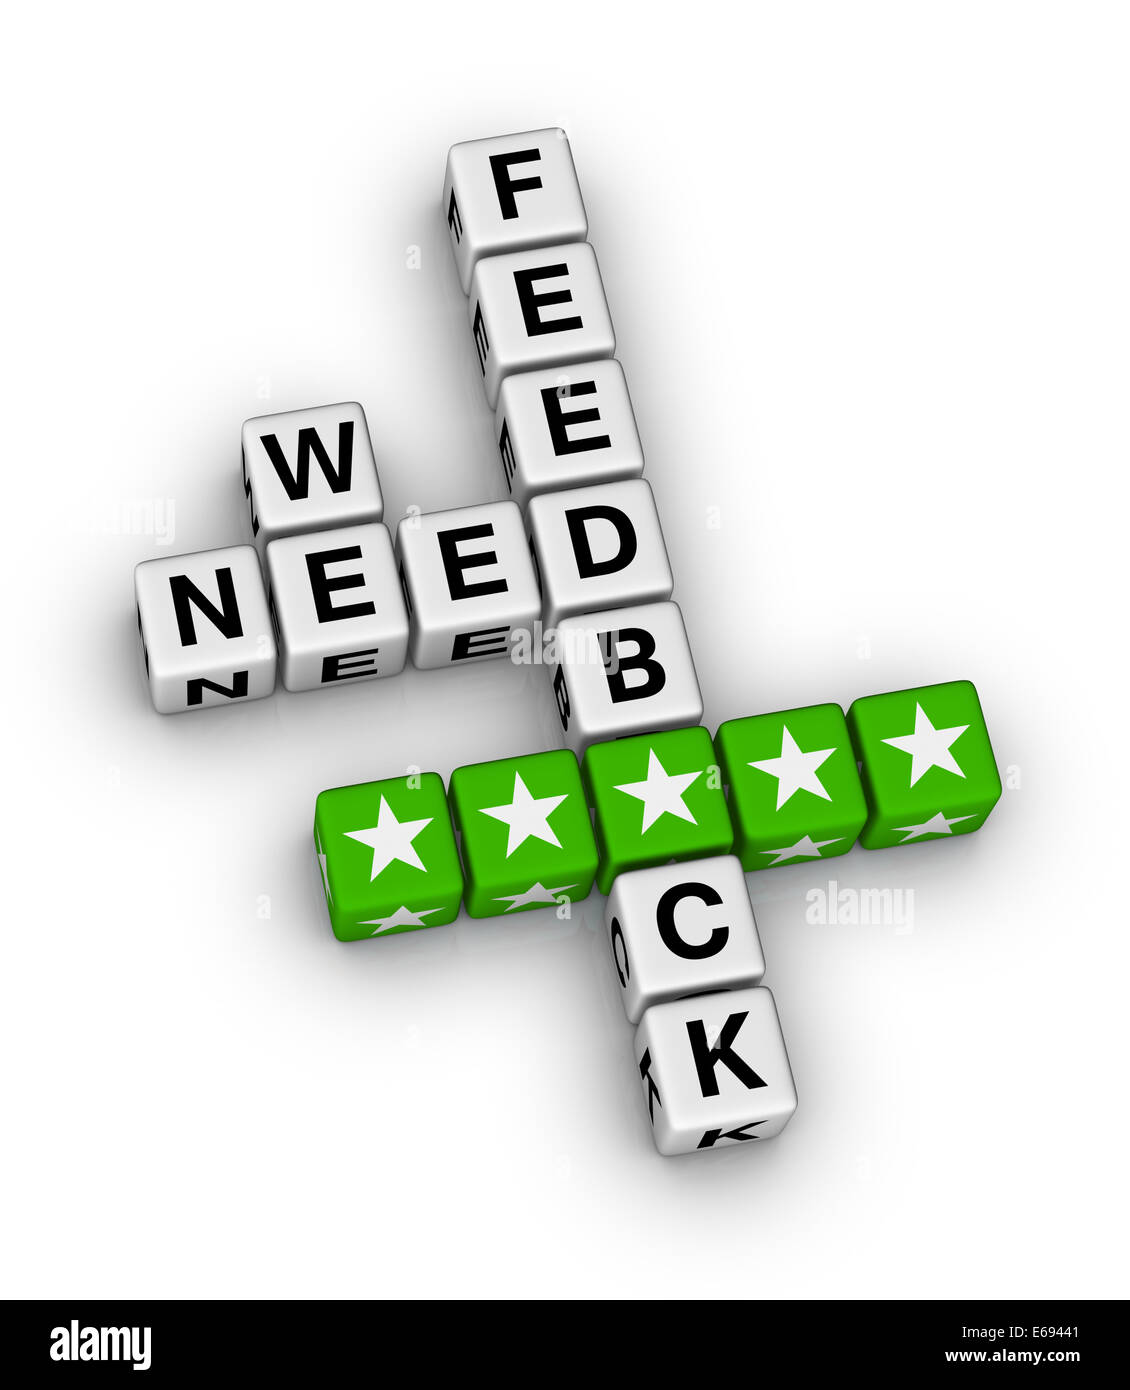 we want feedback crossword puzzle Stock Photo